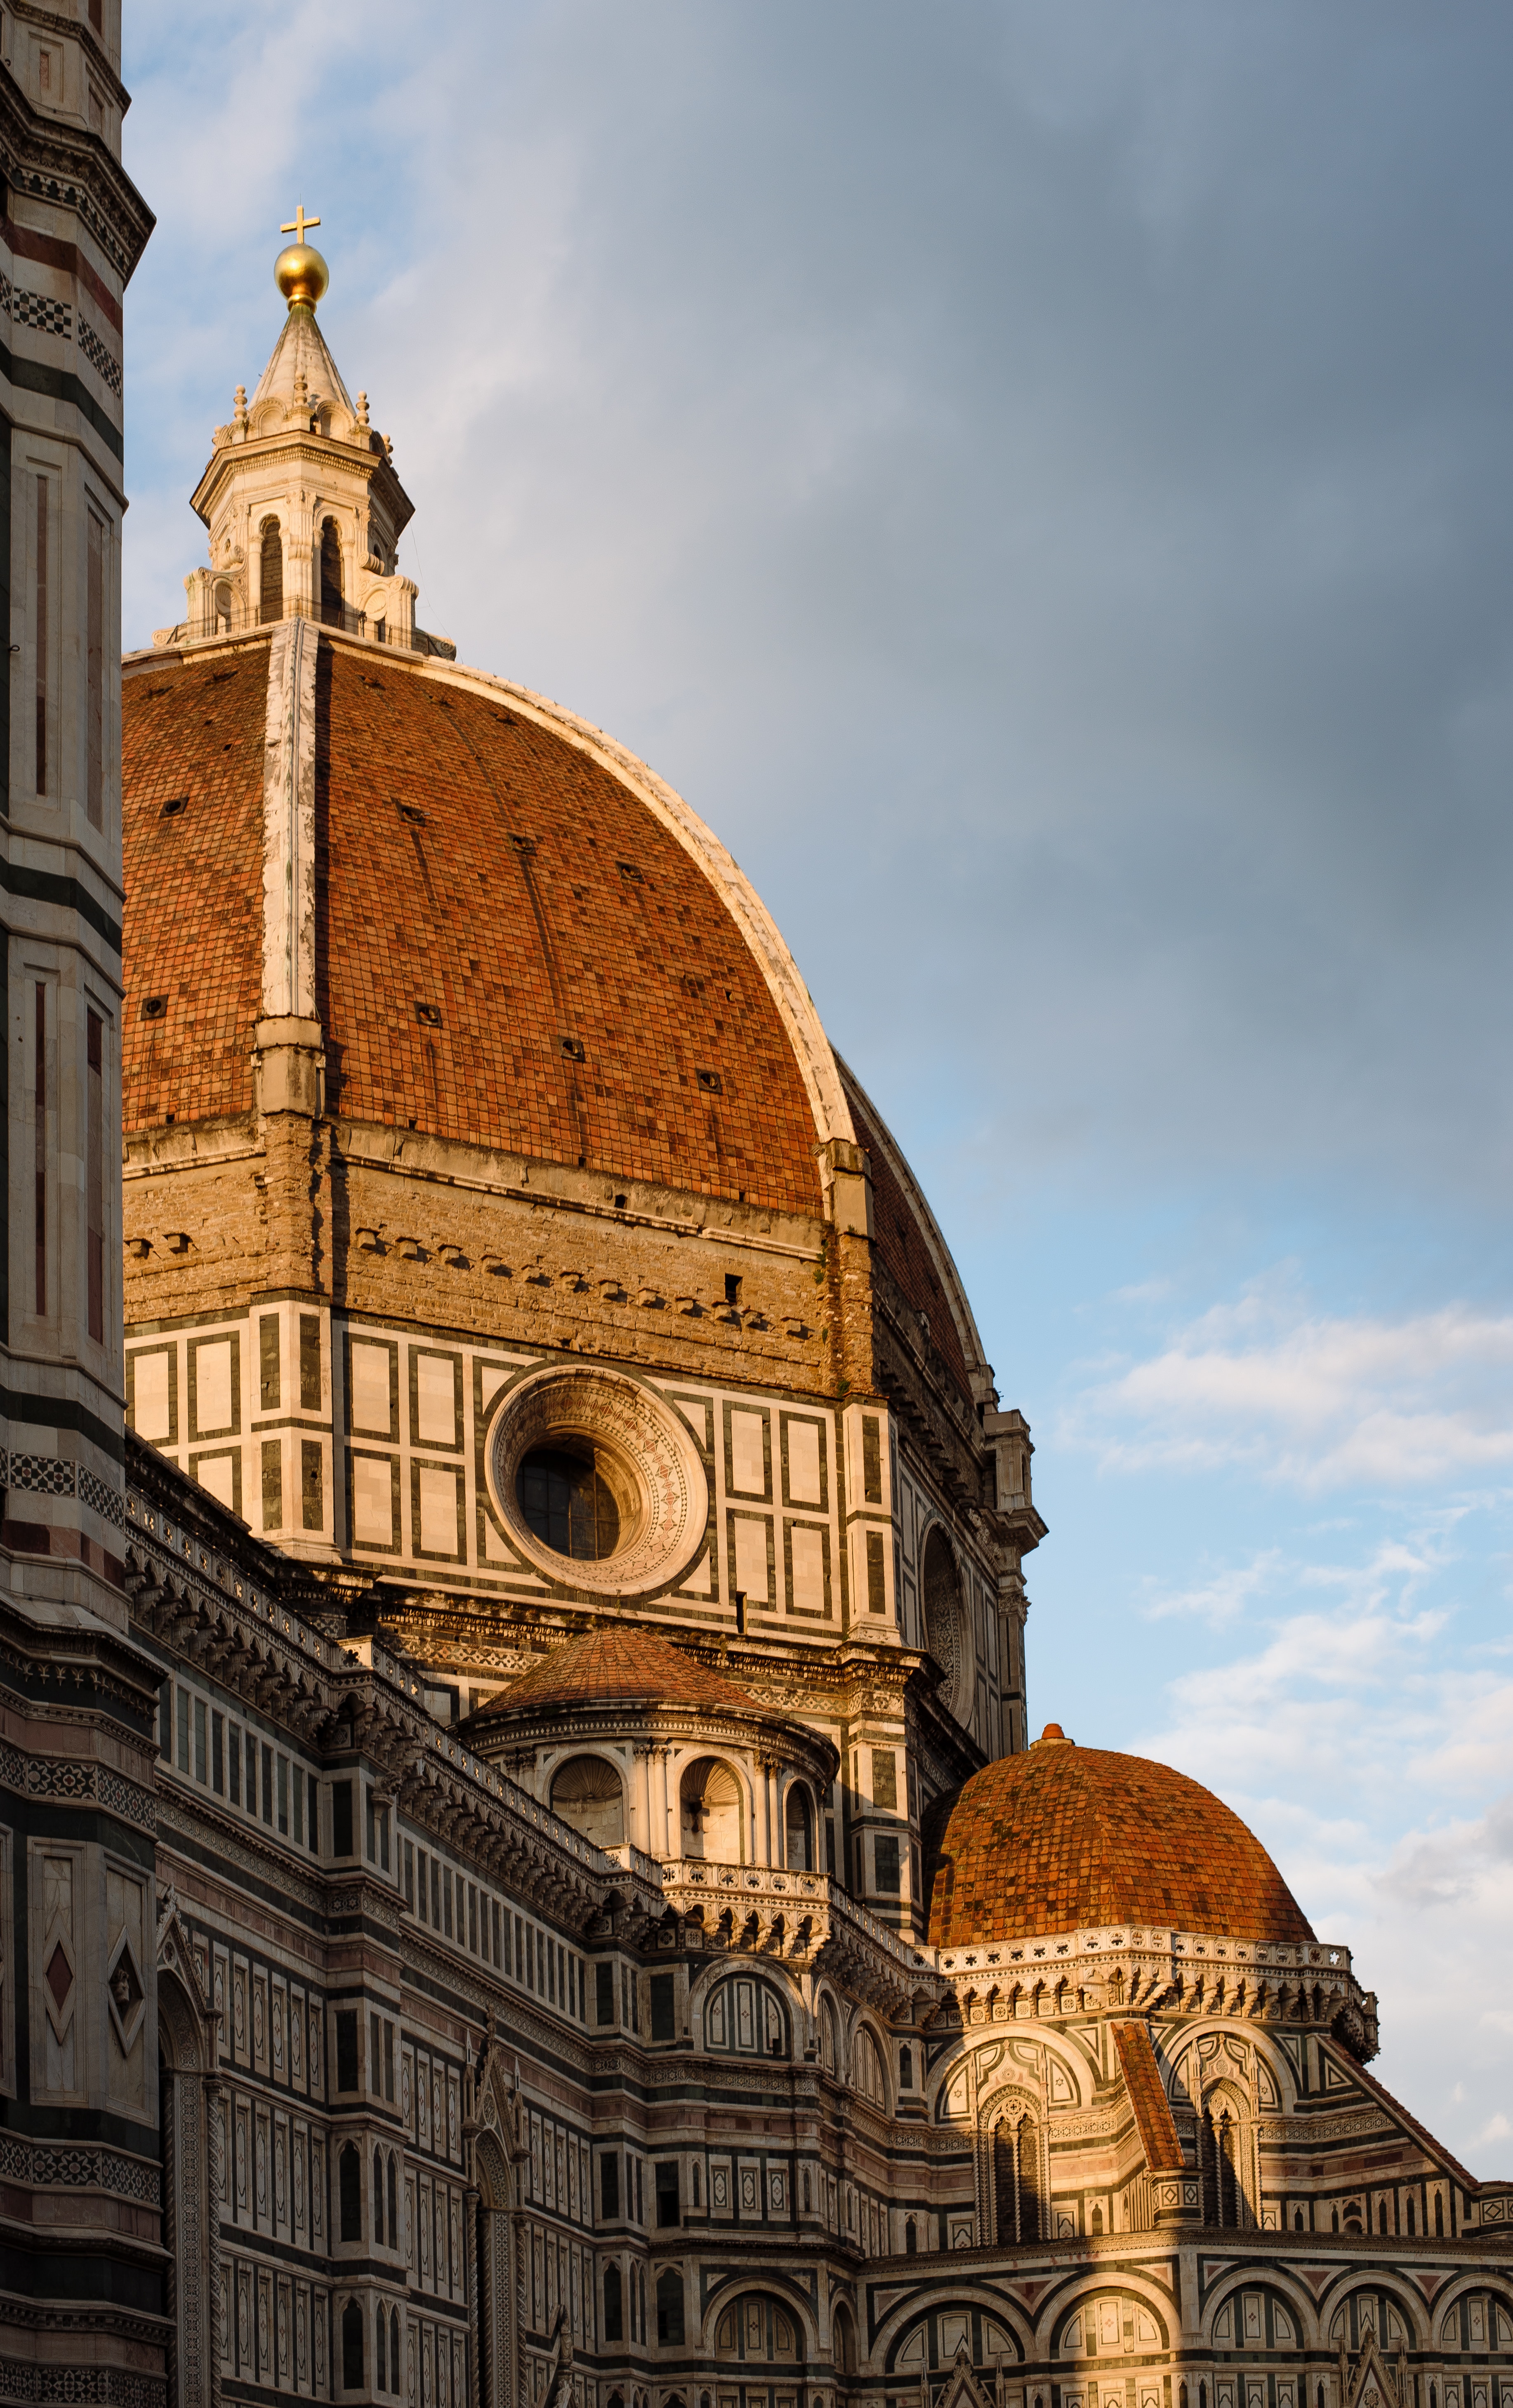 Duomo Santa Maria del Fiore, Florence, Italy.